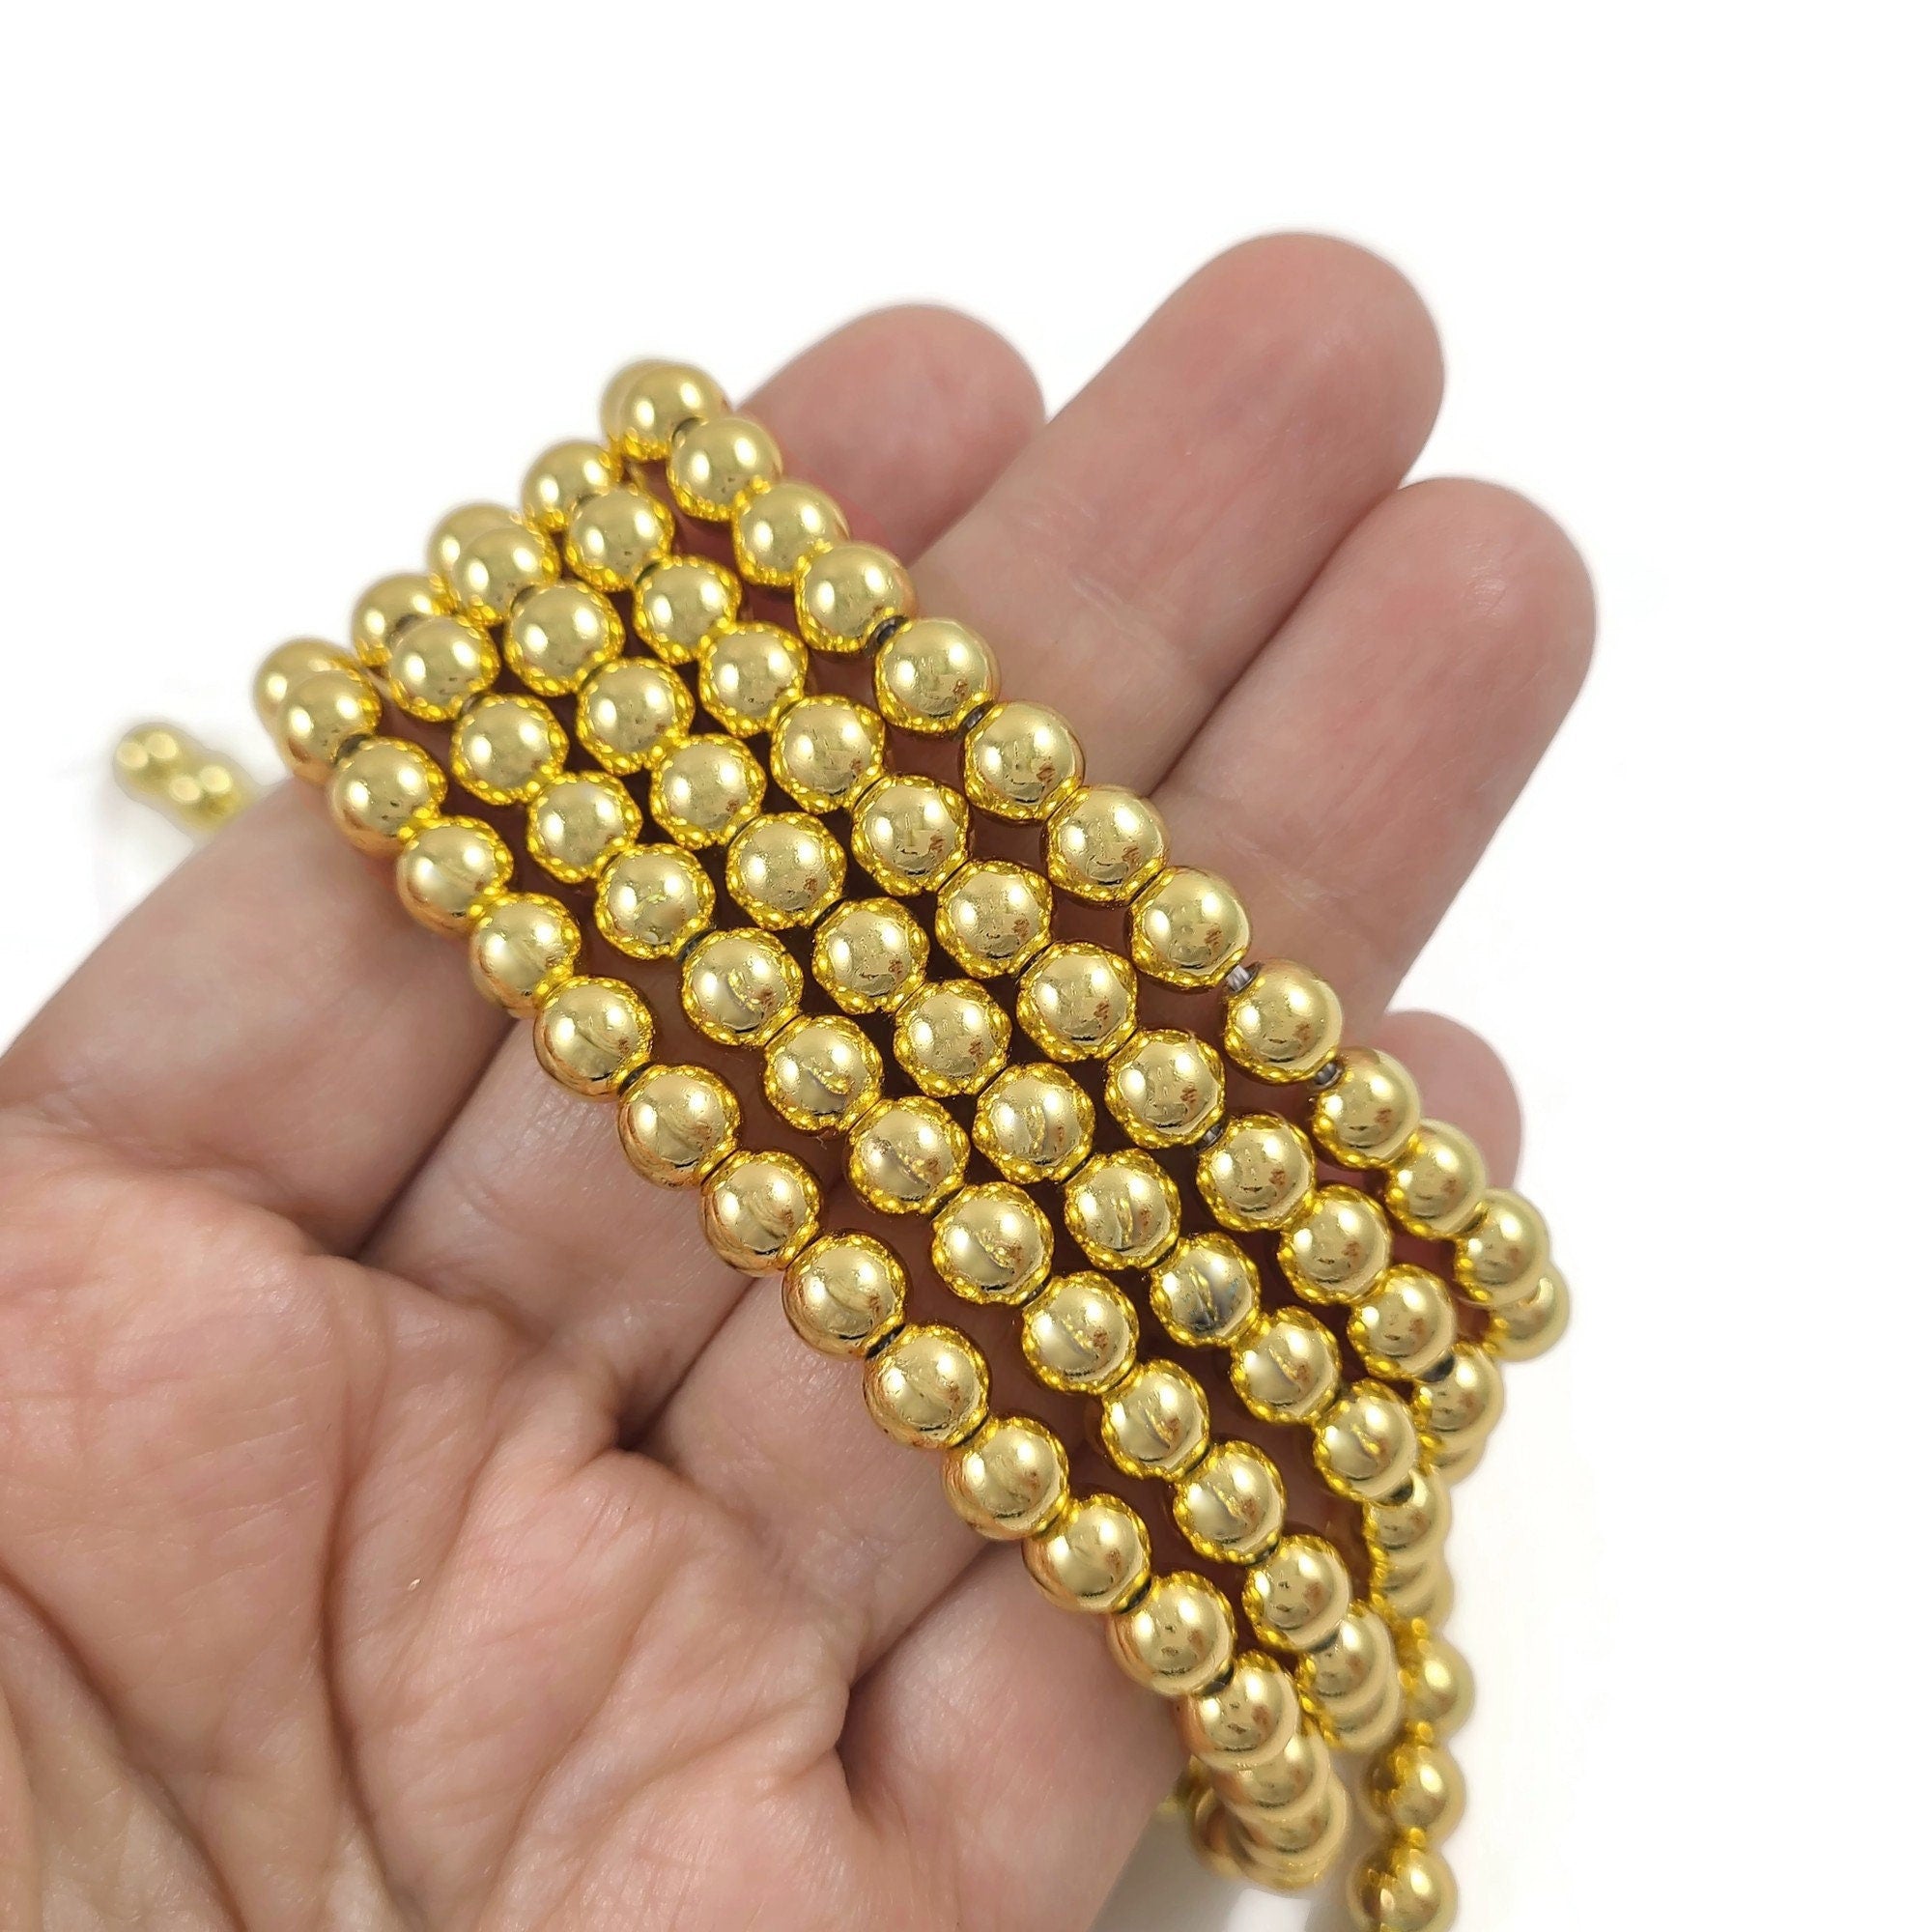 Gold hematite beads, Grade AAA, Long-lasting plated, 4mm, 6mm, Round gemstone beads, Jewelry making supplies